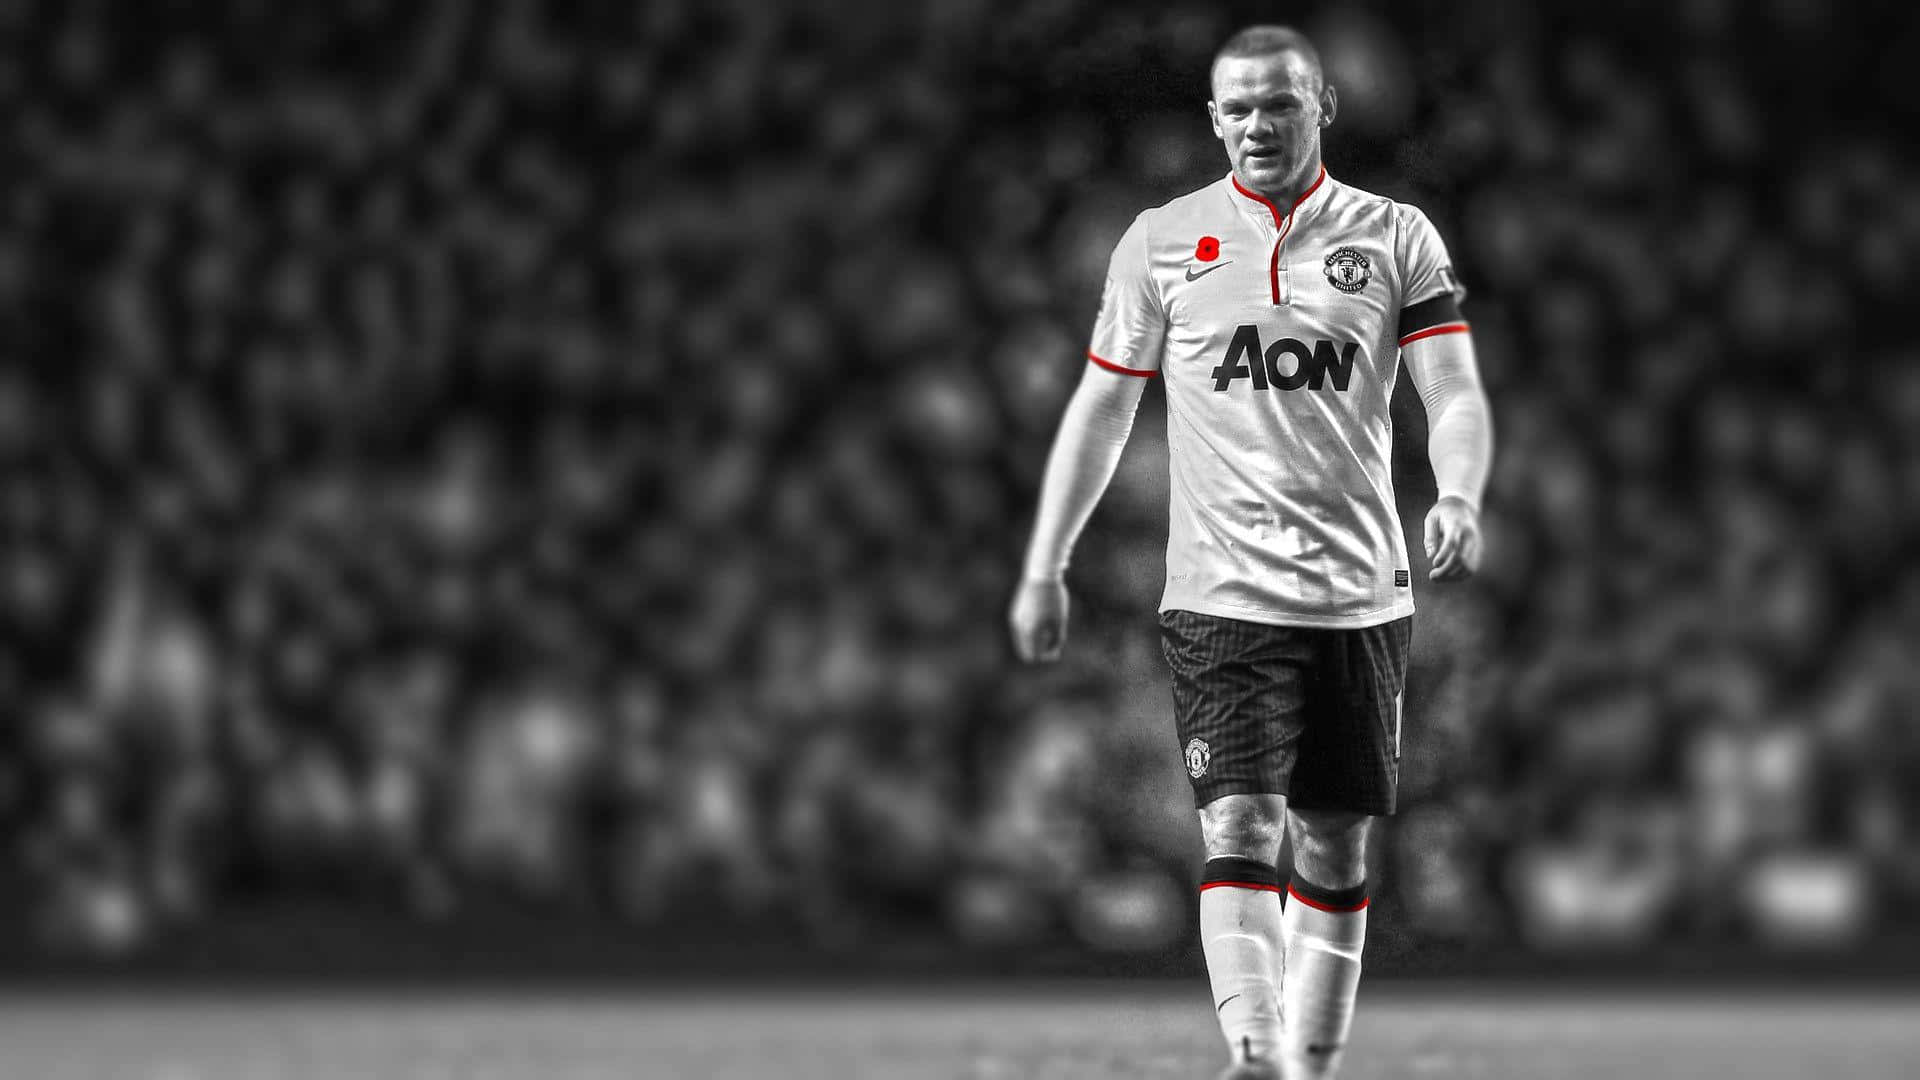 Wayne Rooney Monochrome Picture